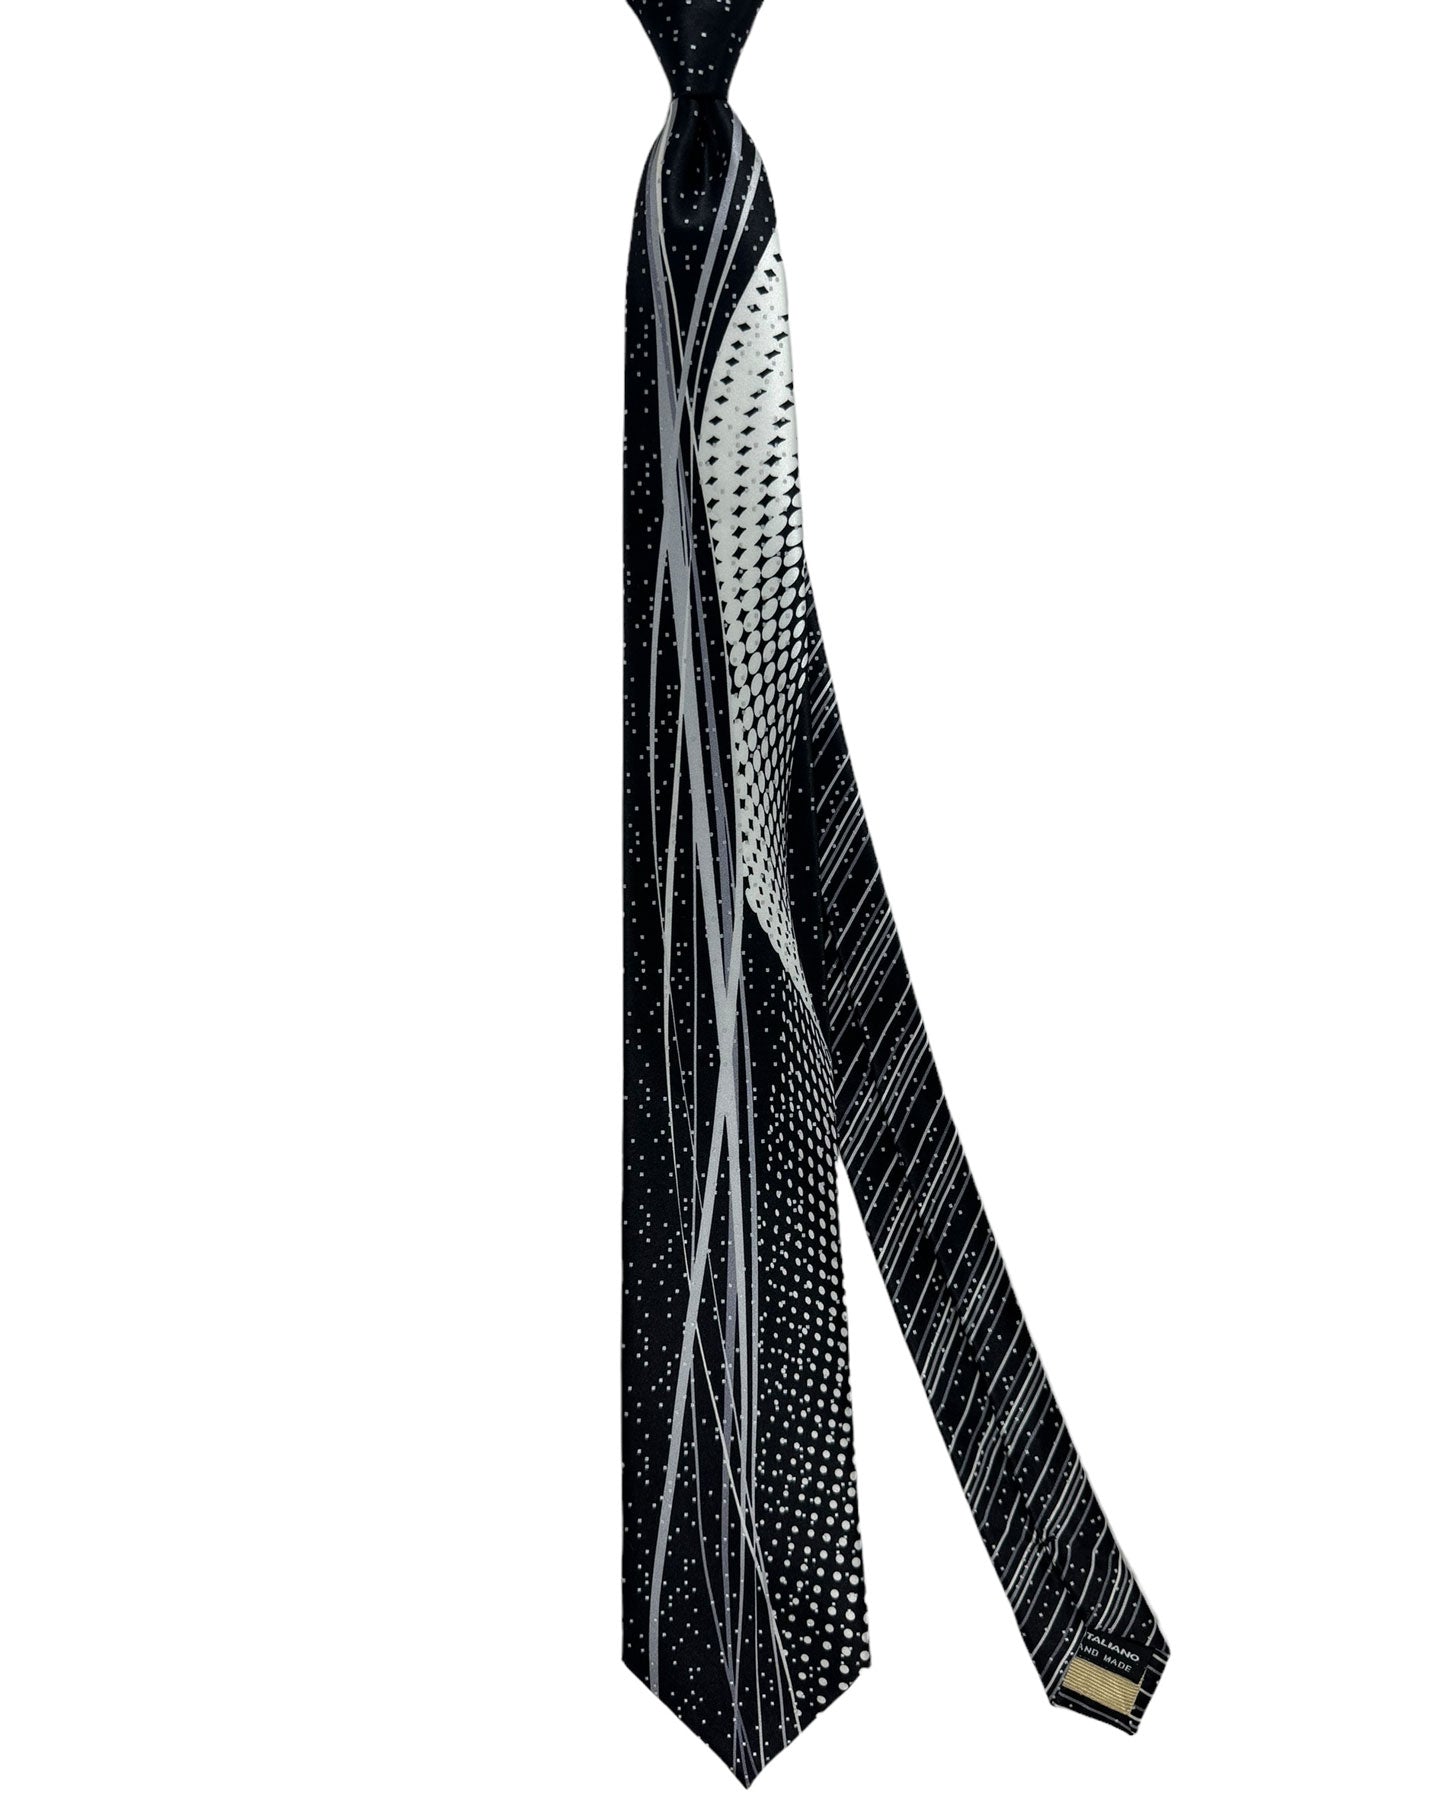 Vitaliano Pancaldi Silk Tie Black Gray Swirl Design